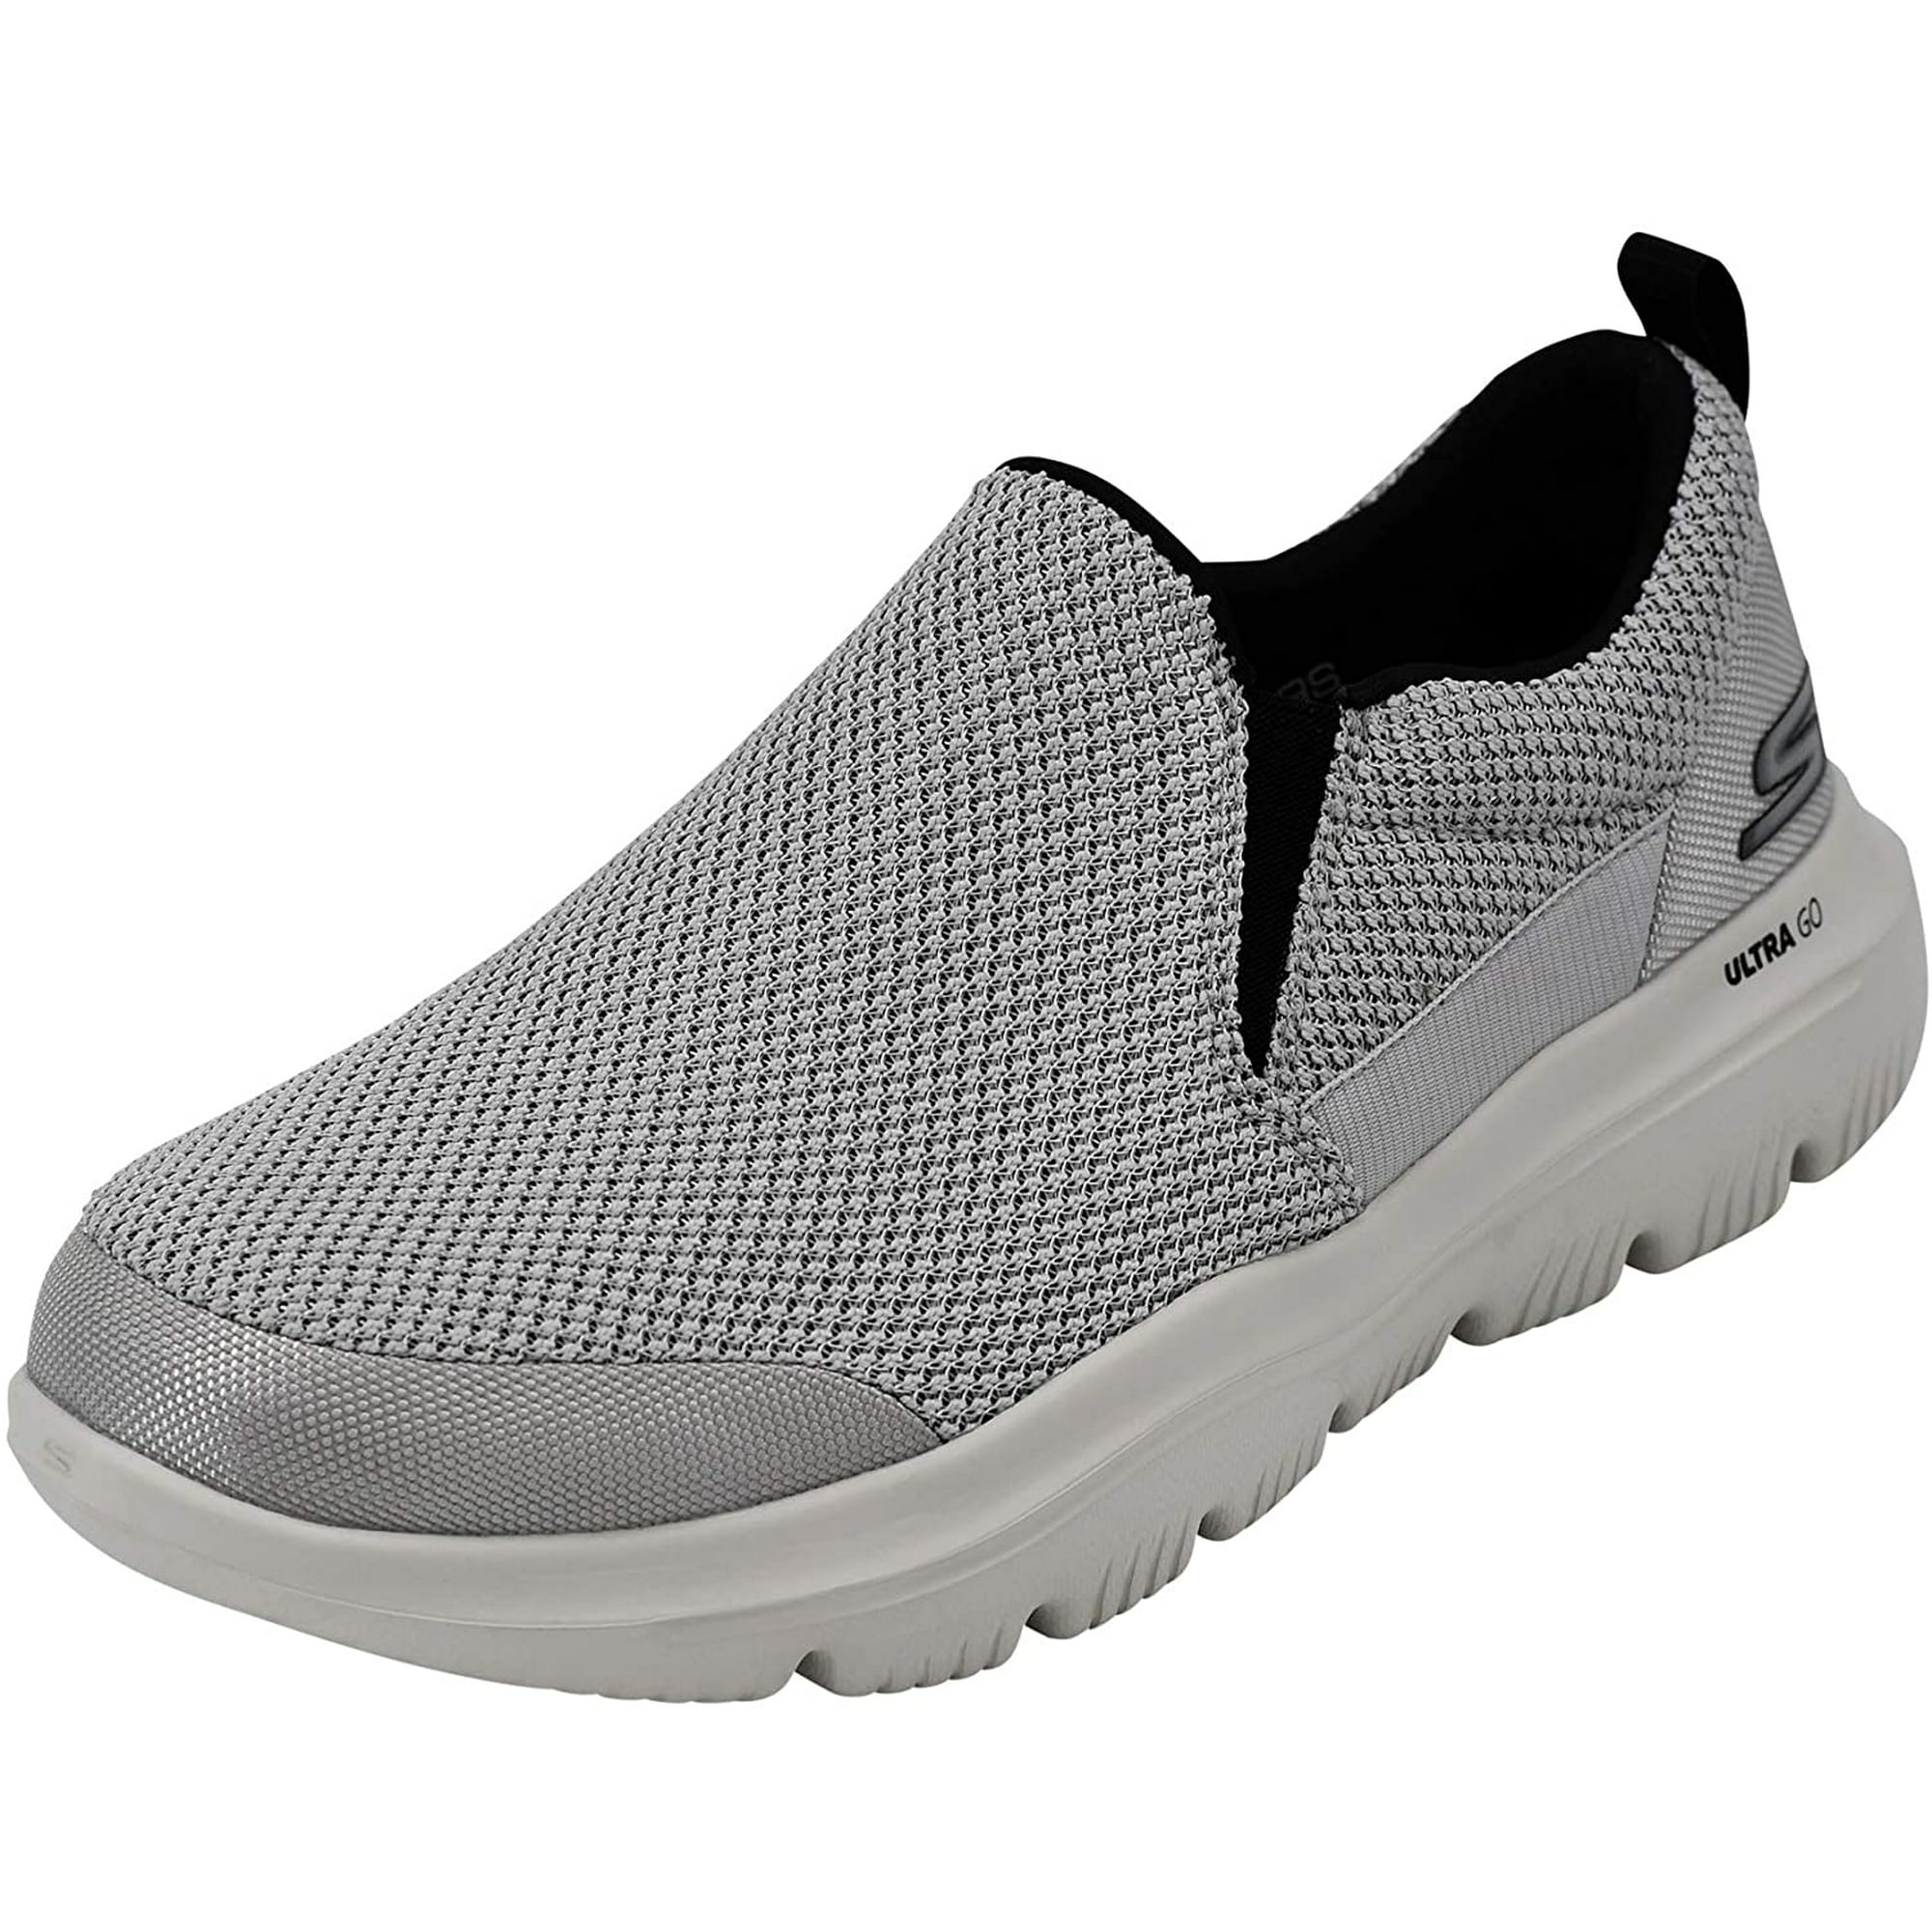 Skechers Men's Walk Evolution Ultra-Impeccable Sneaker, Light Grey, 10.5 US Walmart.com